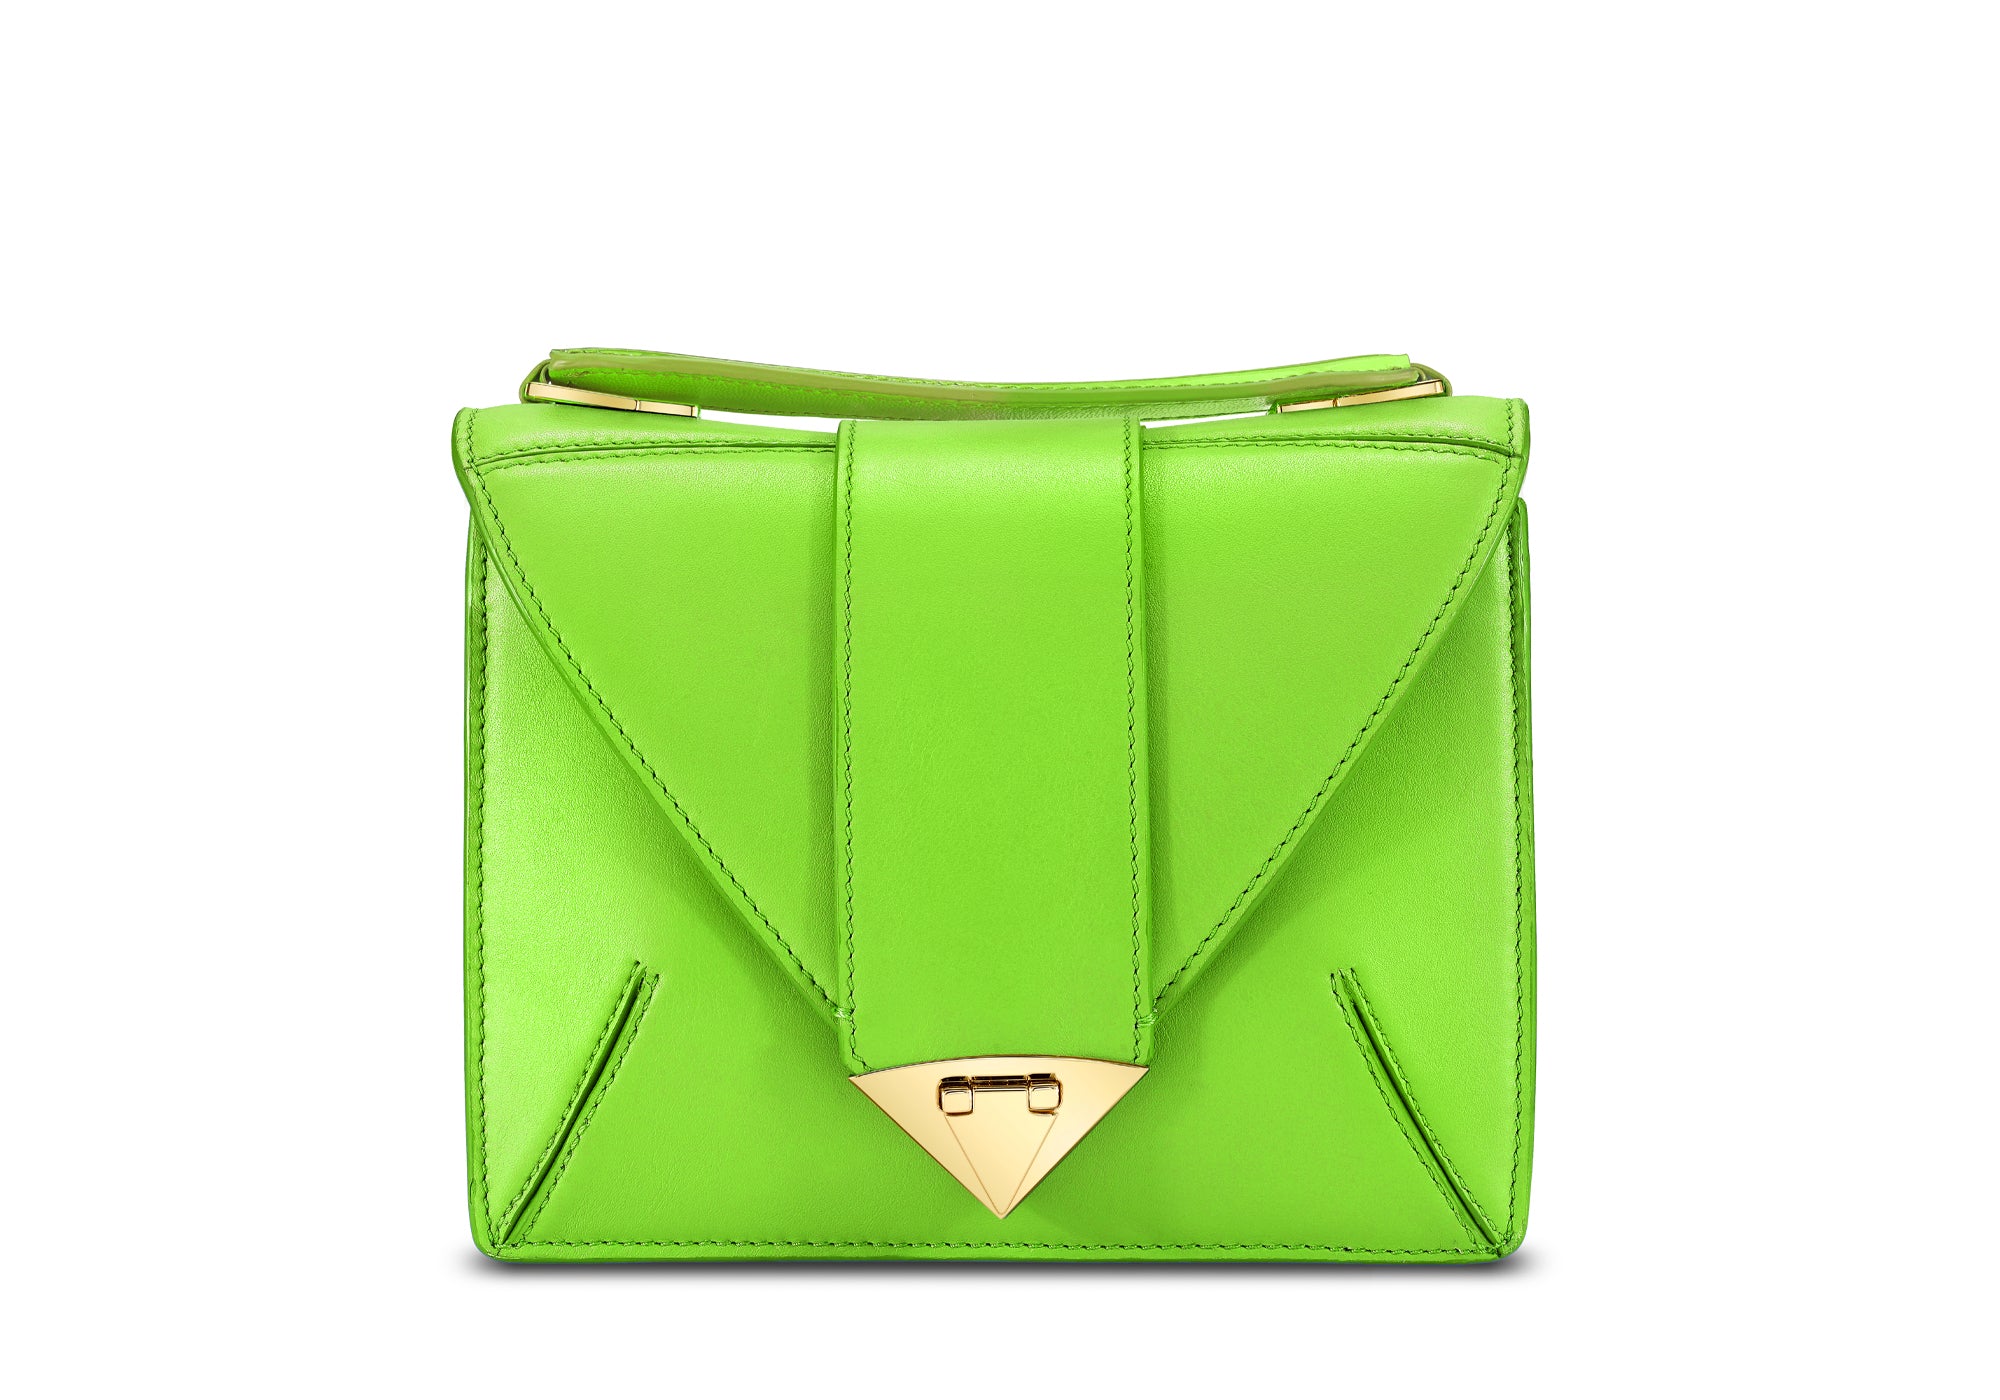 John Deere Women's Hand Bag Purse Tractor Neon Green | eBay